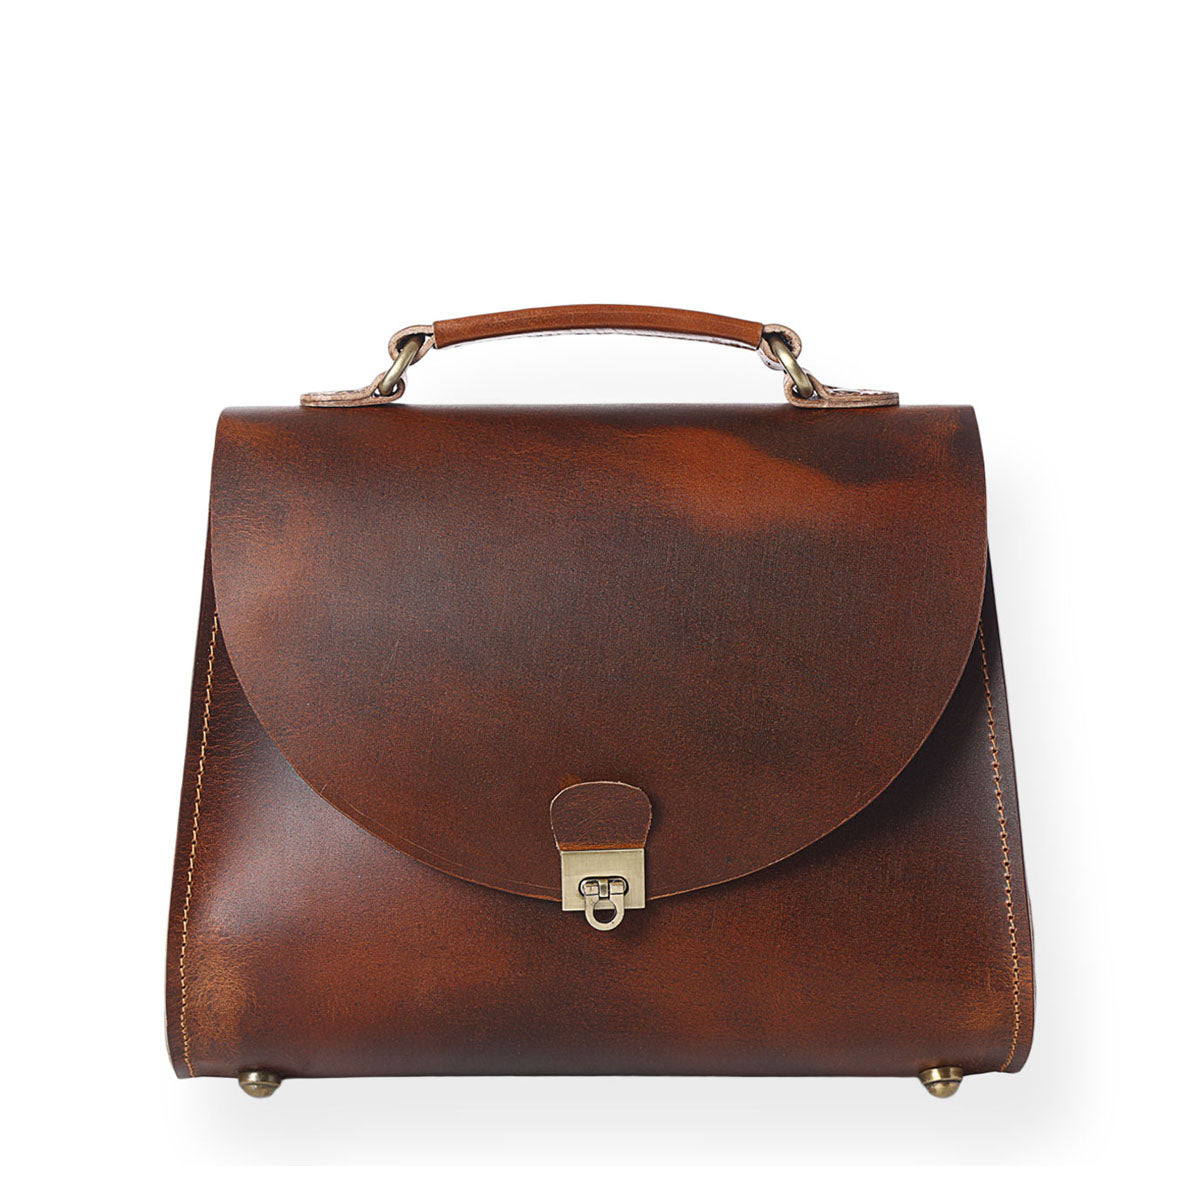 Victoria Handbag (Saddle Tan)